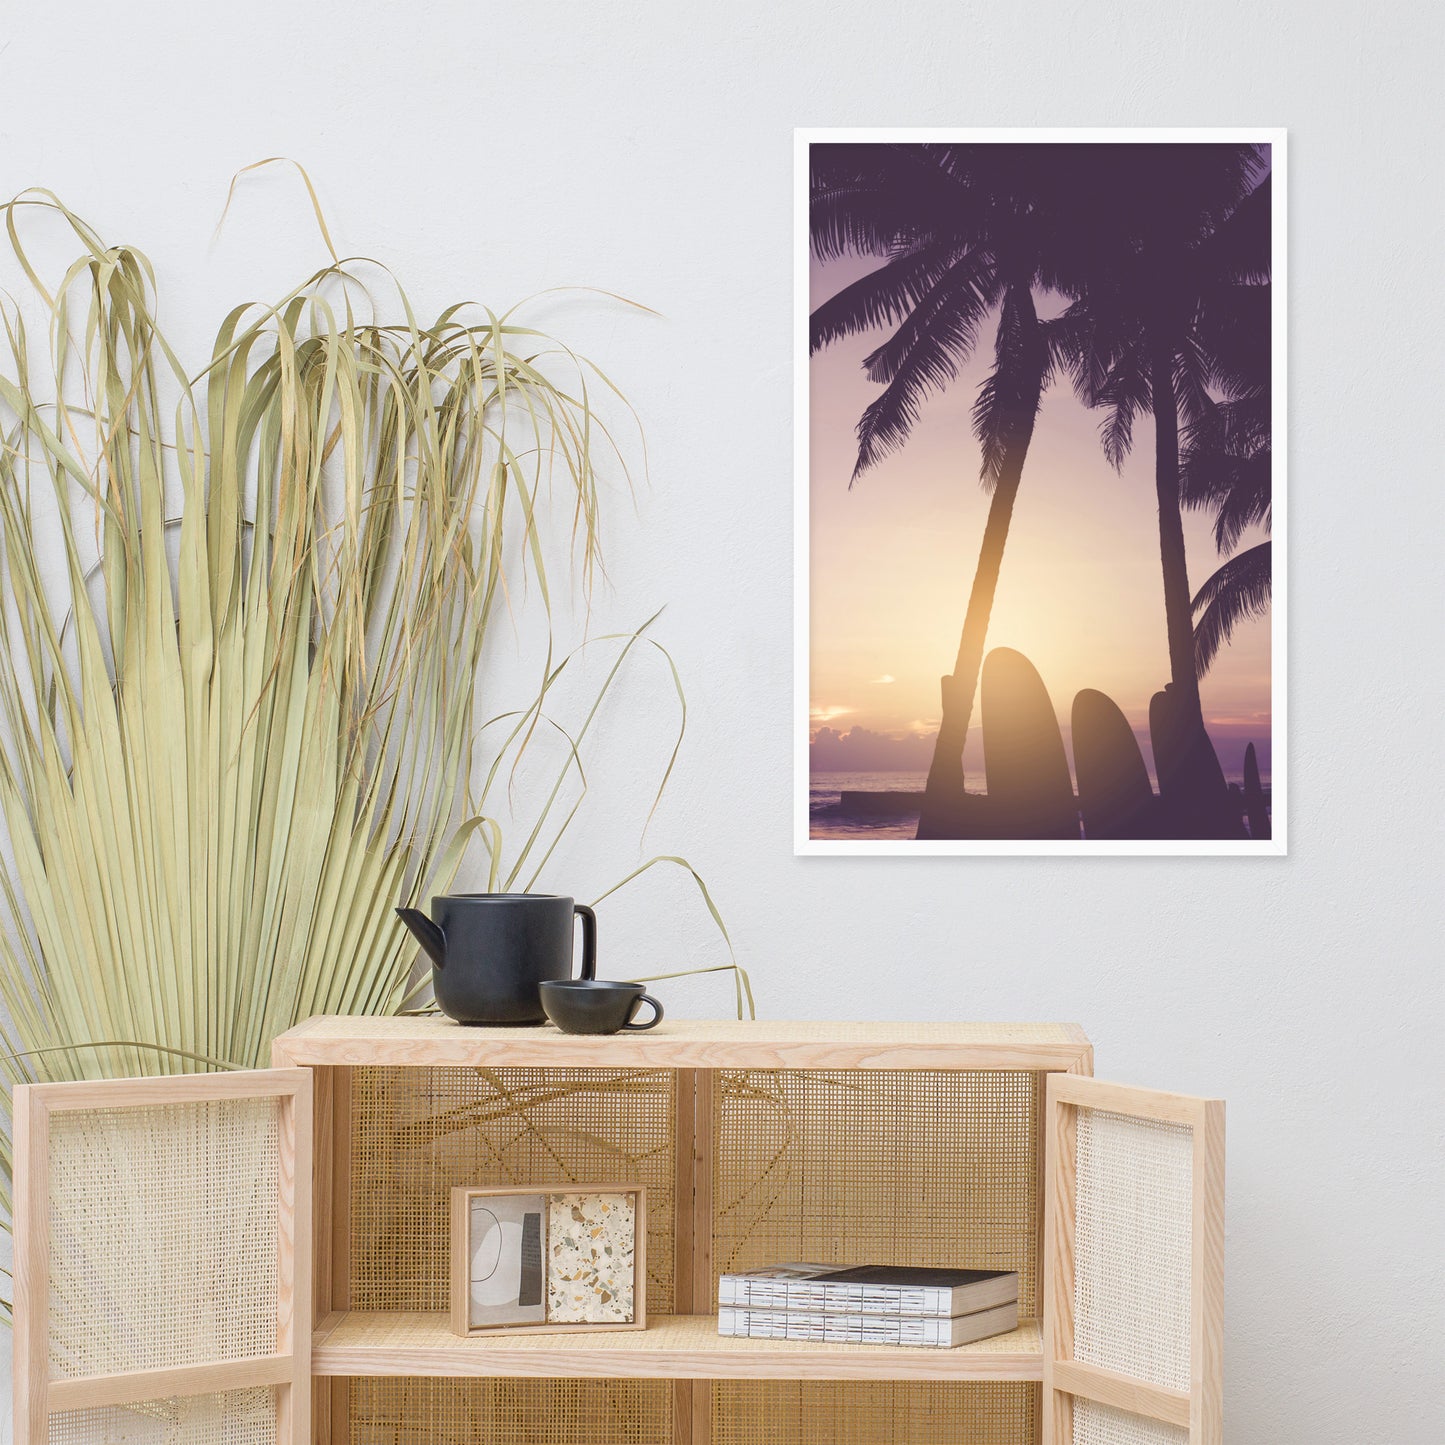 Surfer's Sunset Tropical Coastal Scene Lifestyle Photograph Framed Wall Art Print